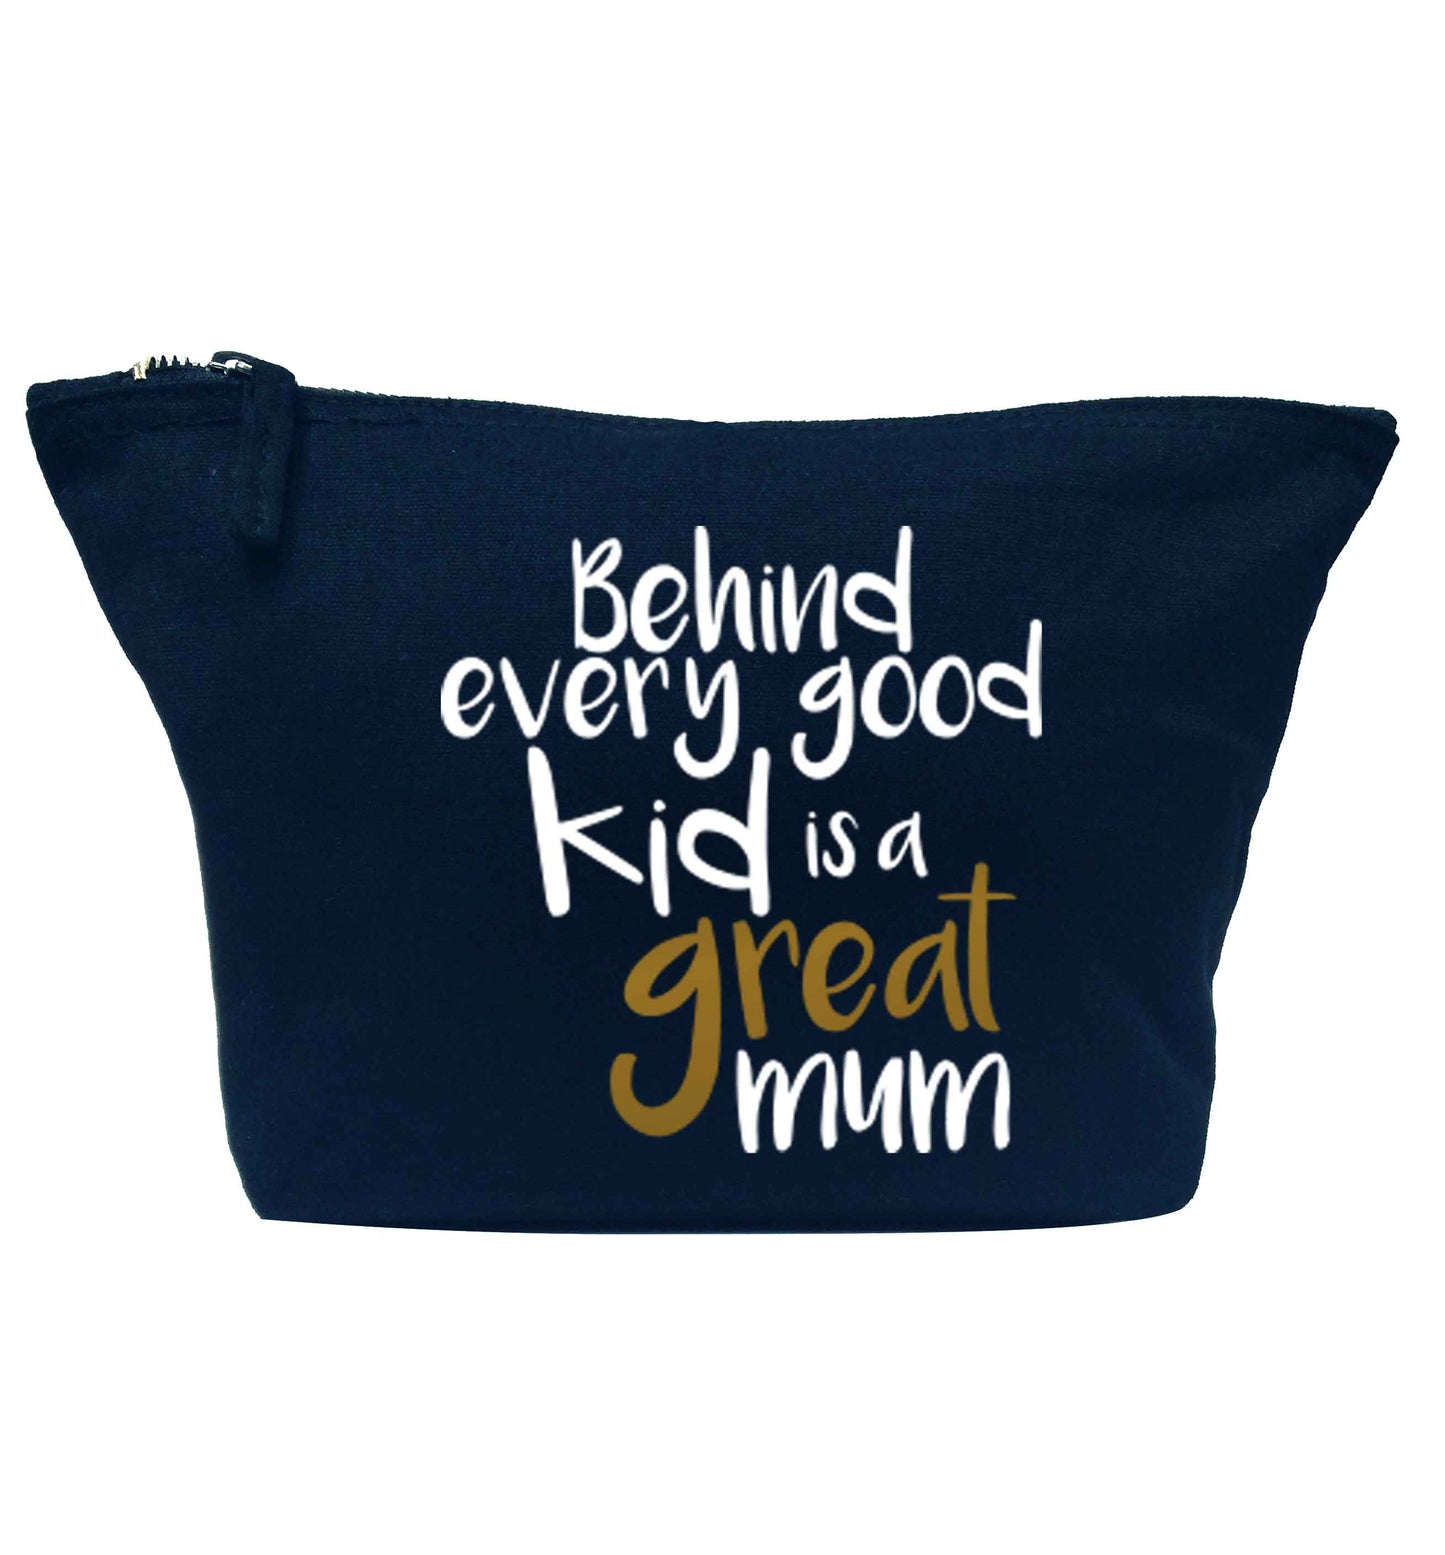 Behind every good kid is a great mum navy makeup bag